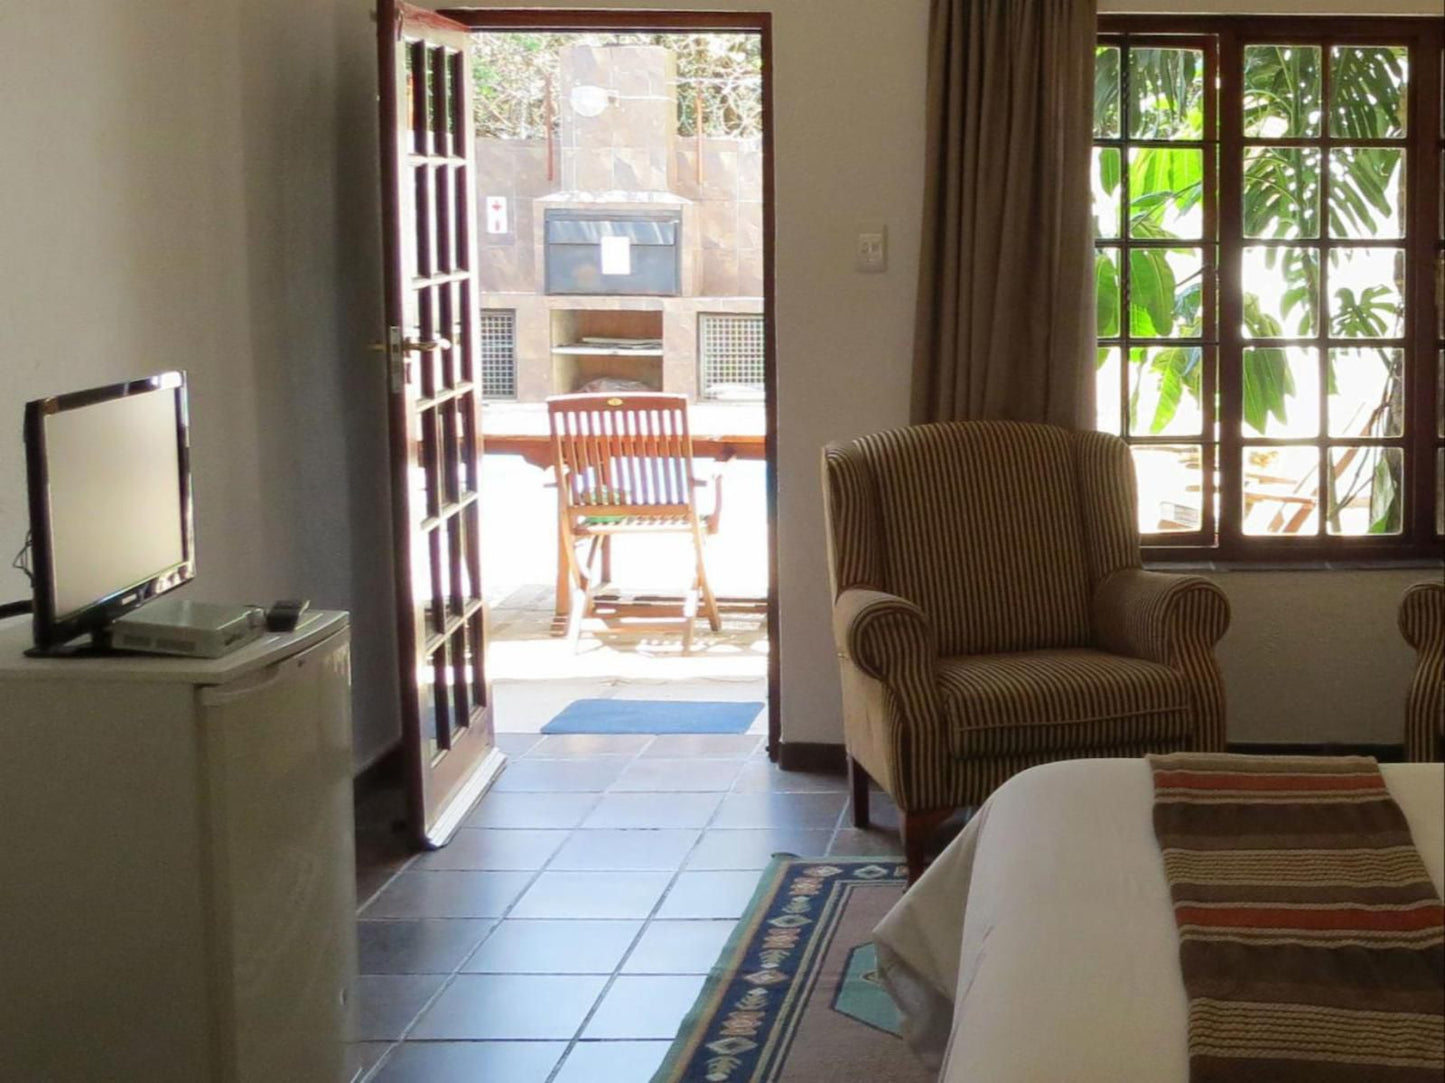 Pensao Guest Lodge Sonheuwel Nelspruit Mpumalanga South Africa Door, Architecture, Palm Tree, Plant, Nature, Wood, Living Room